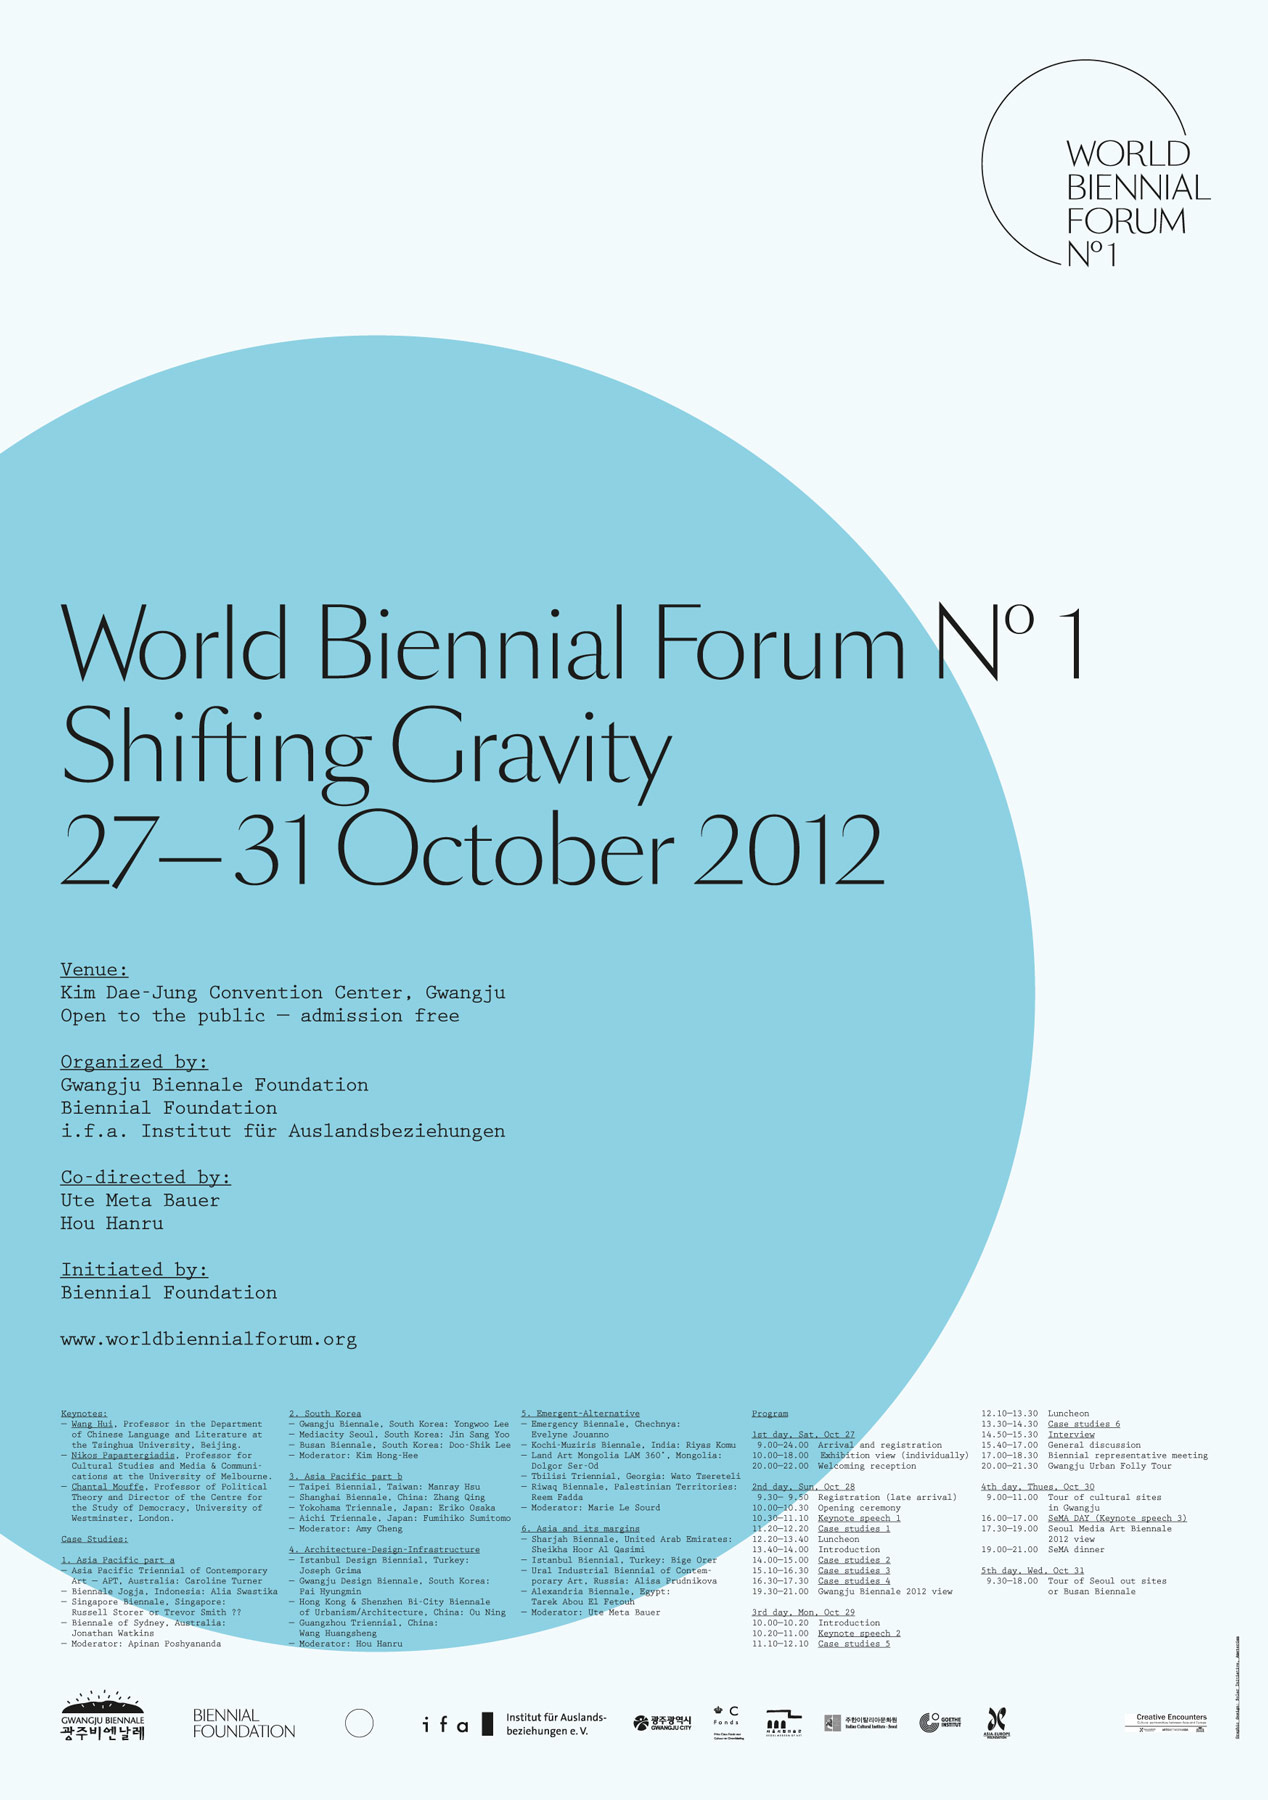 Biennial Foundation, identity, webdesign, branding, graphic design, poster